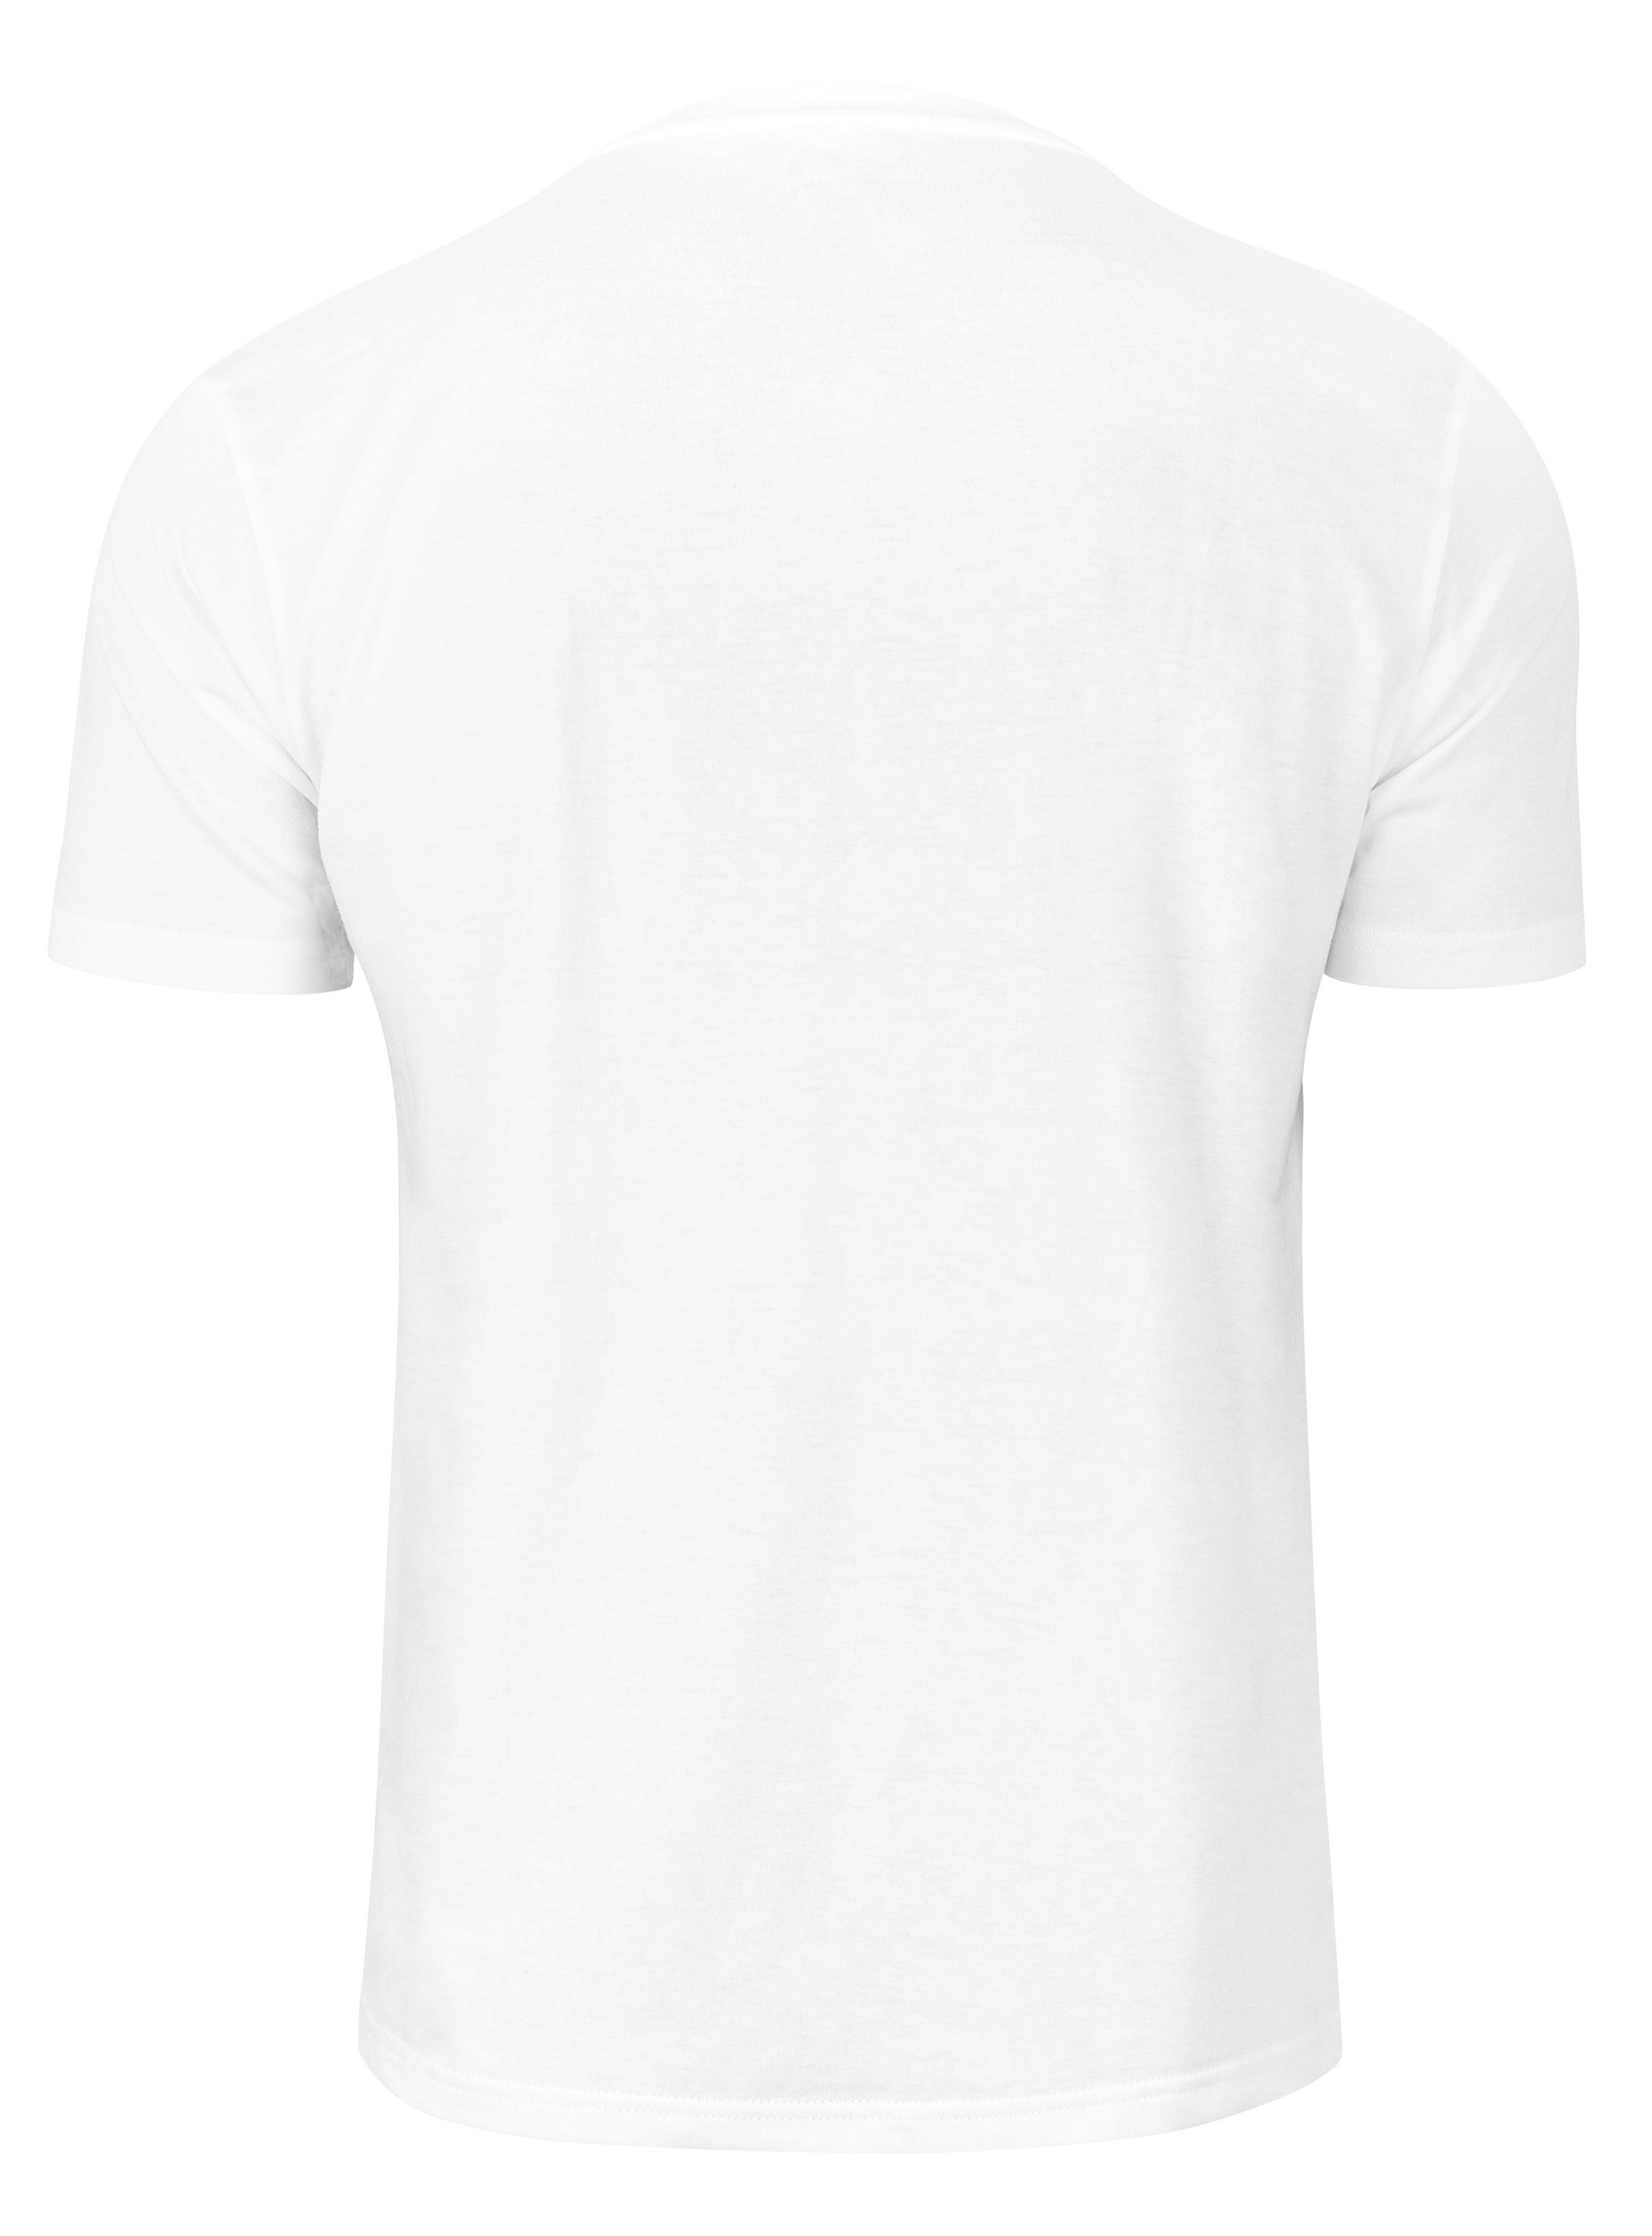 Cotton Prime® Fußball weiss T-Shirt